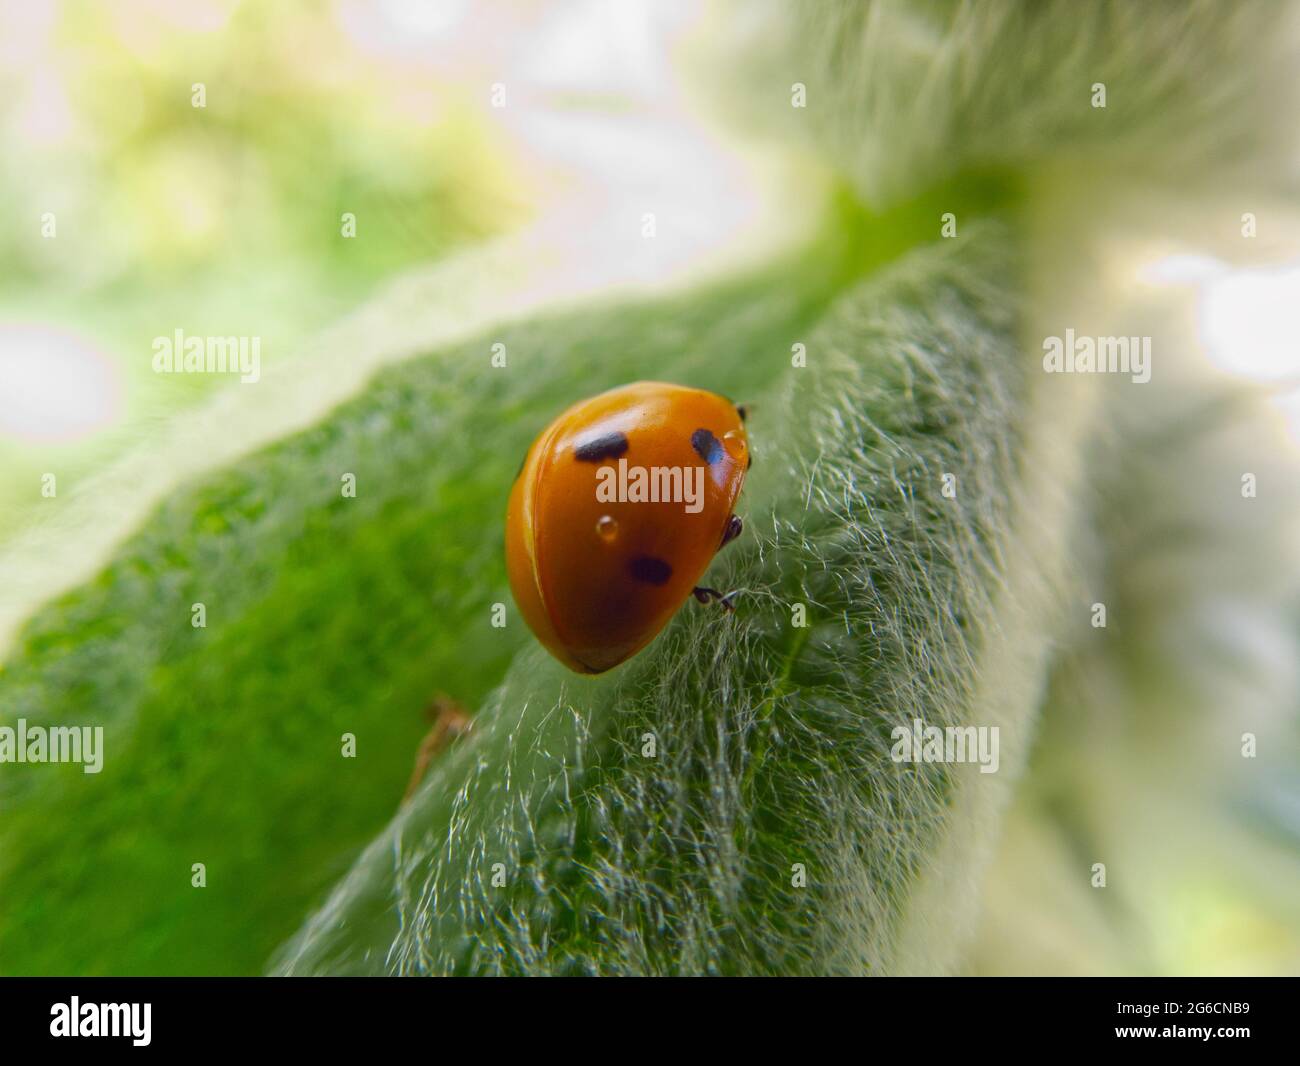 Close up of a ladybug on a leaf Stock Photo